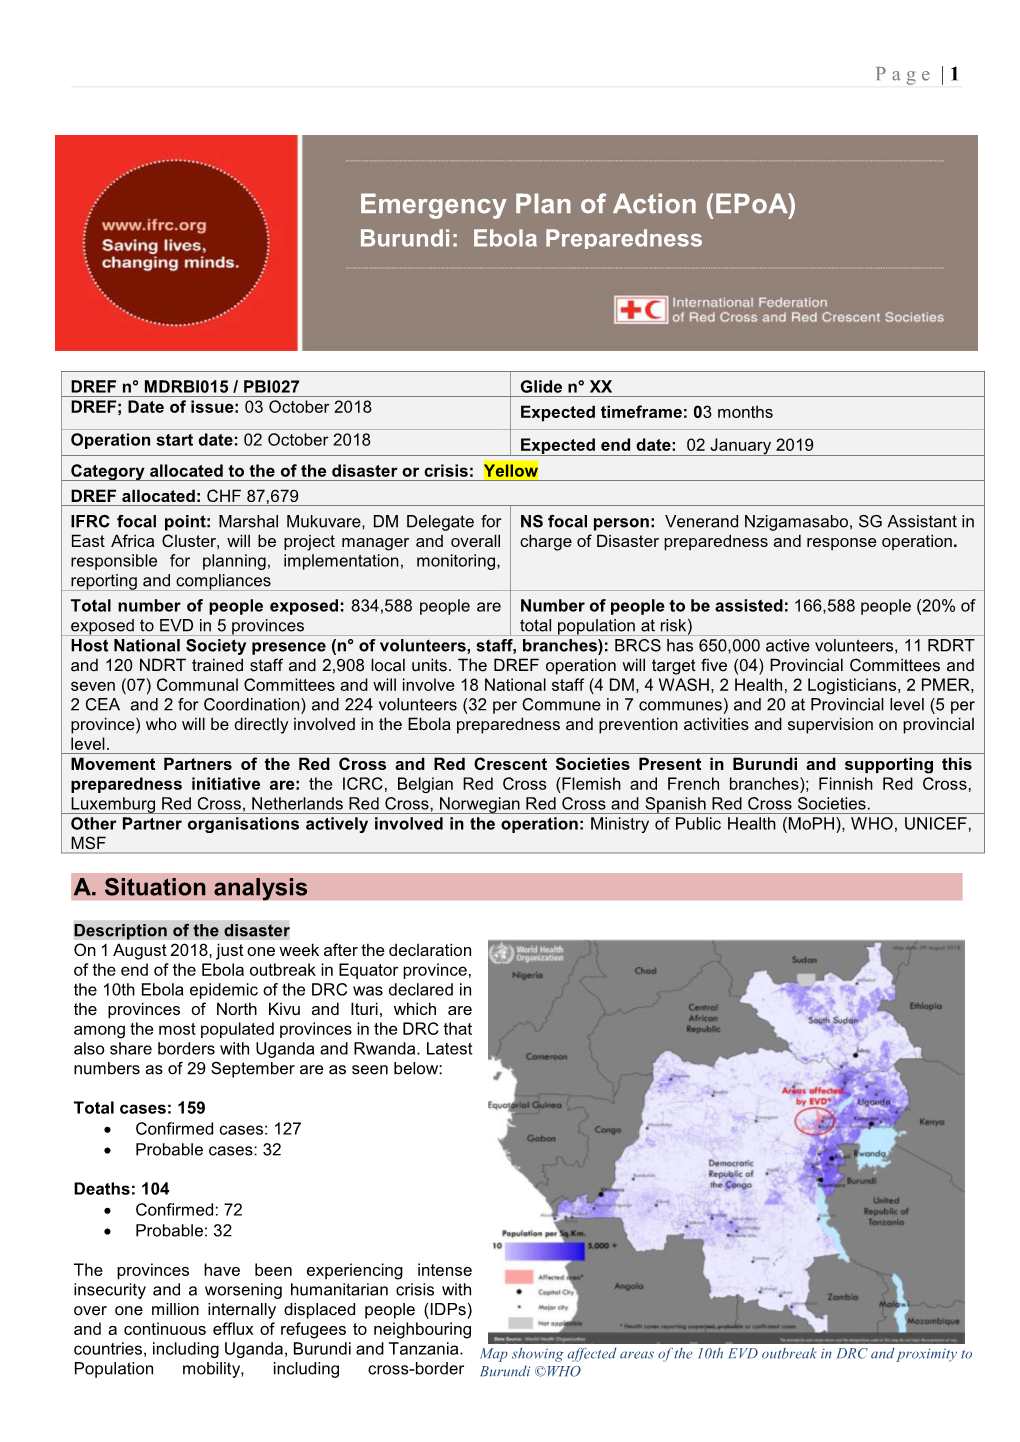 Burundi: Ebola Preparedness